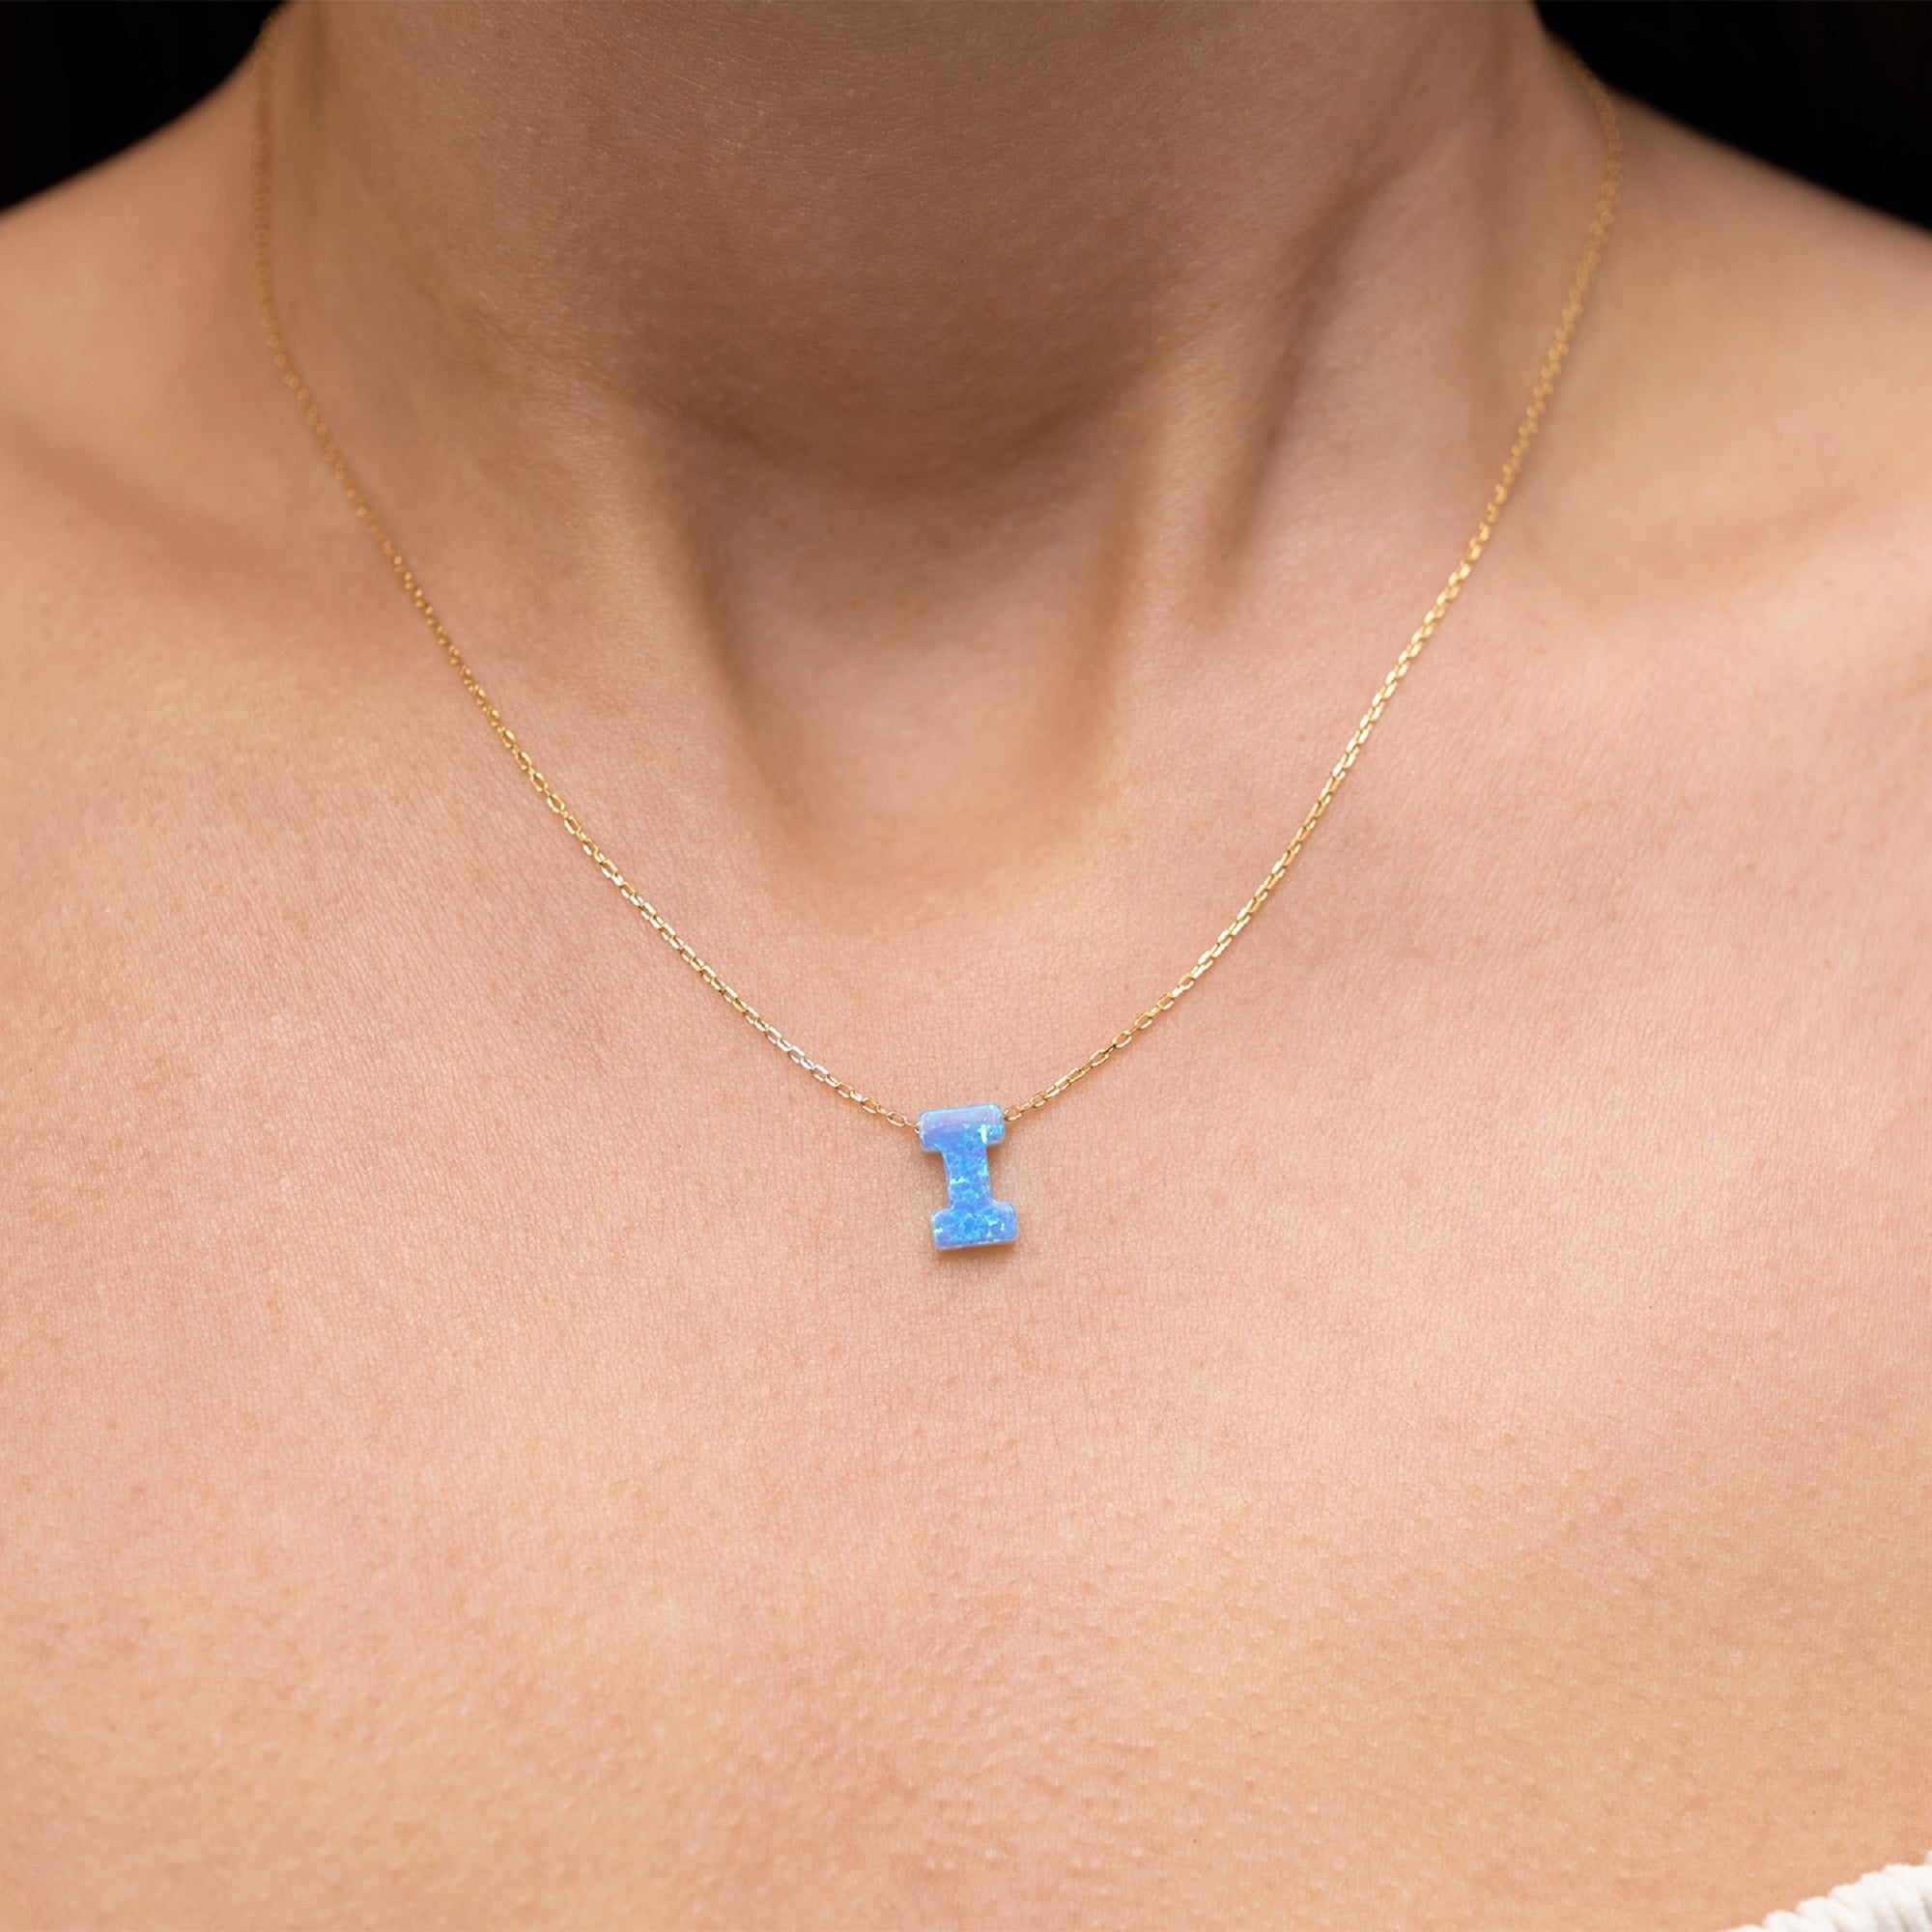 Blue Opal Initial Necklace - "I" letter pendant